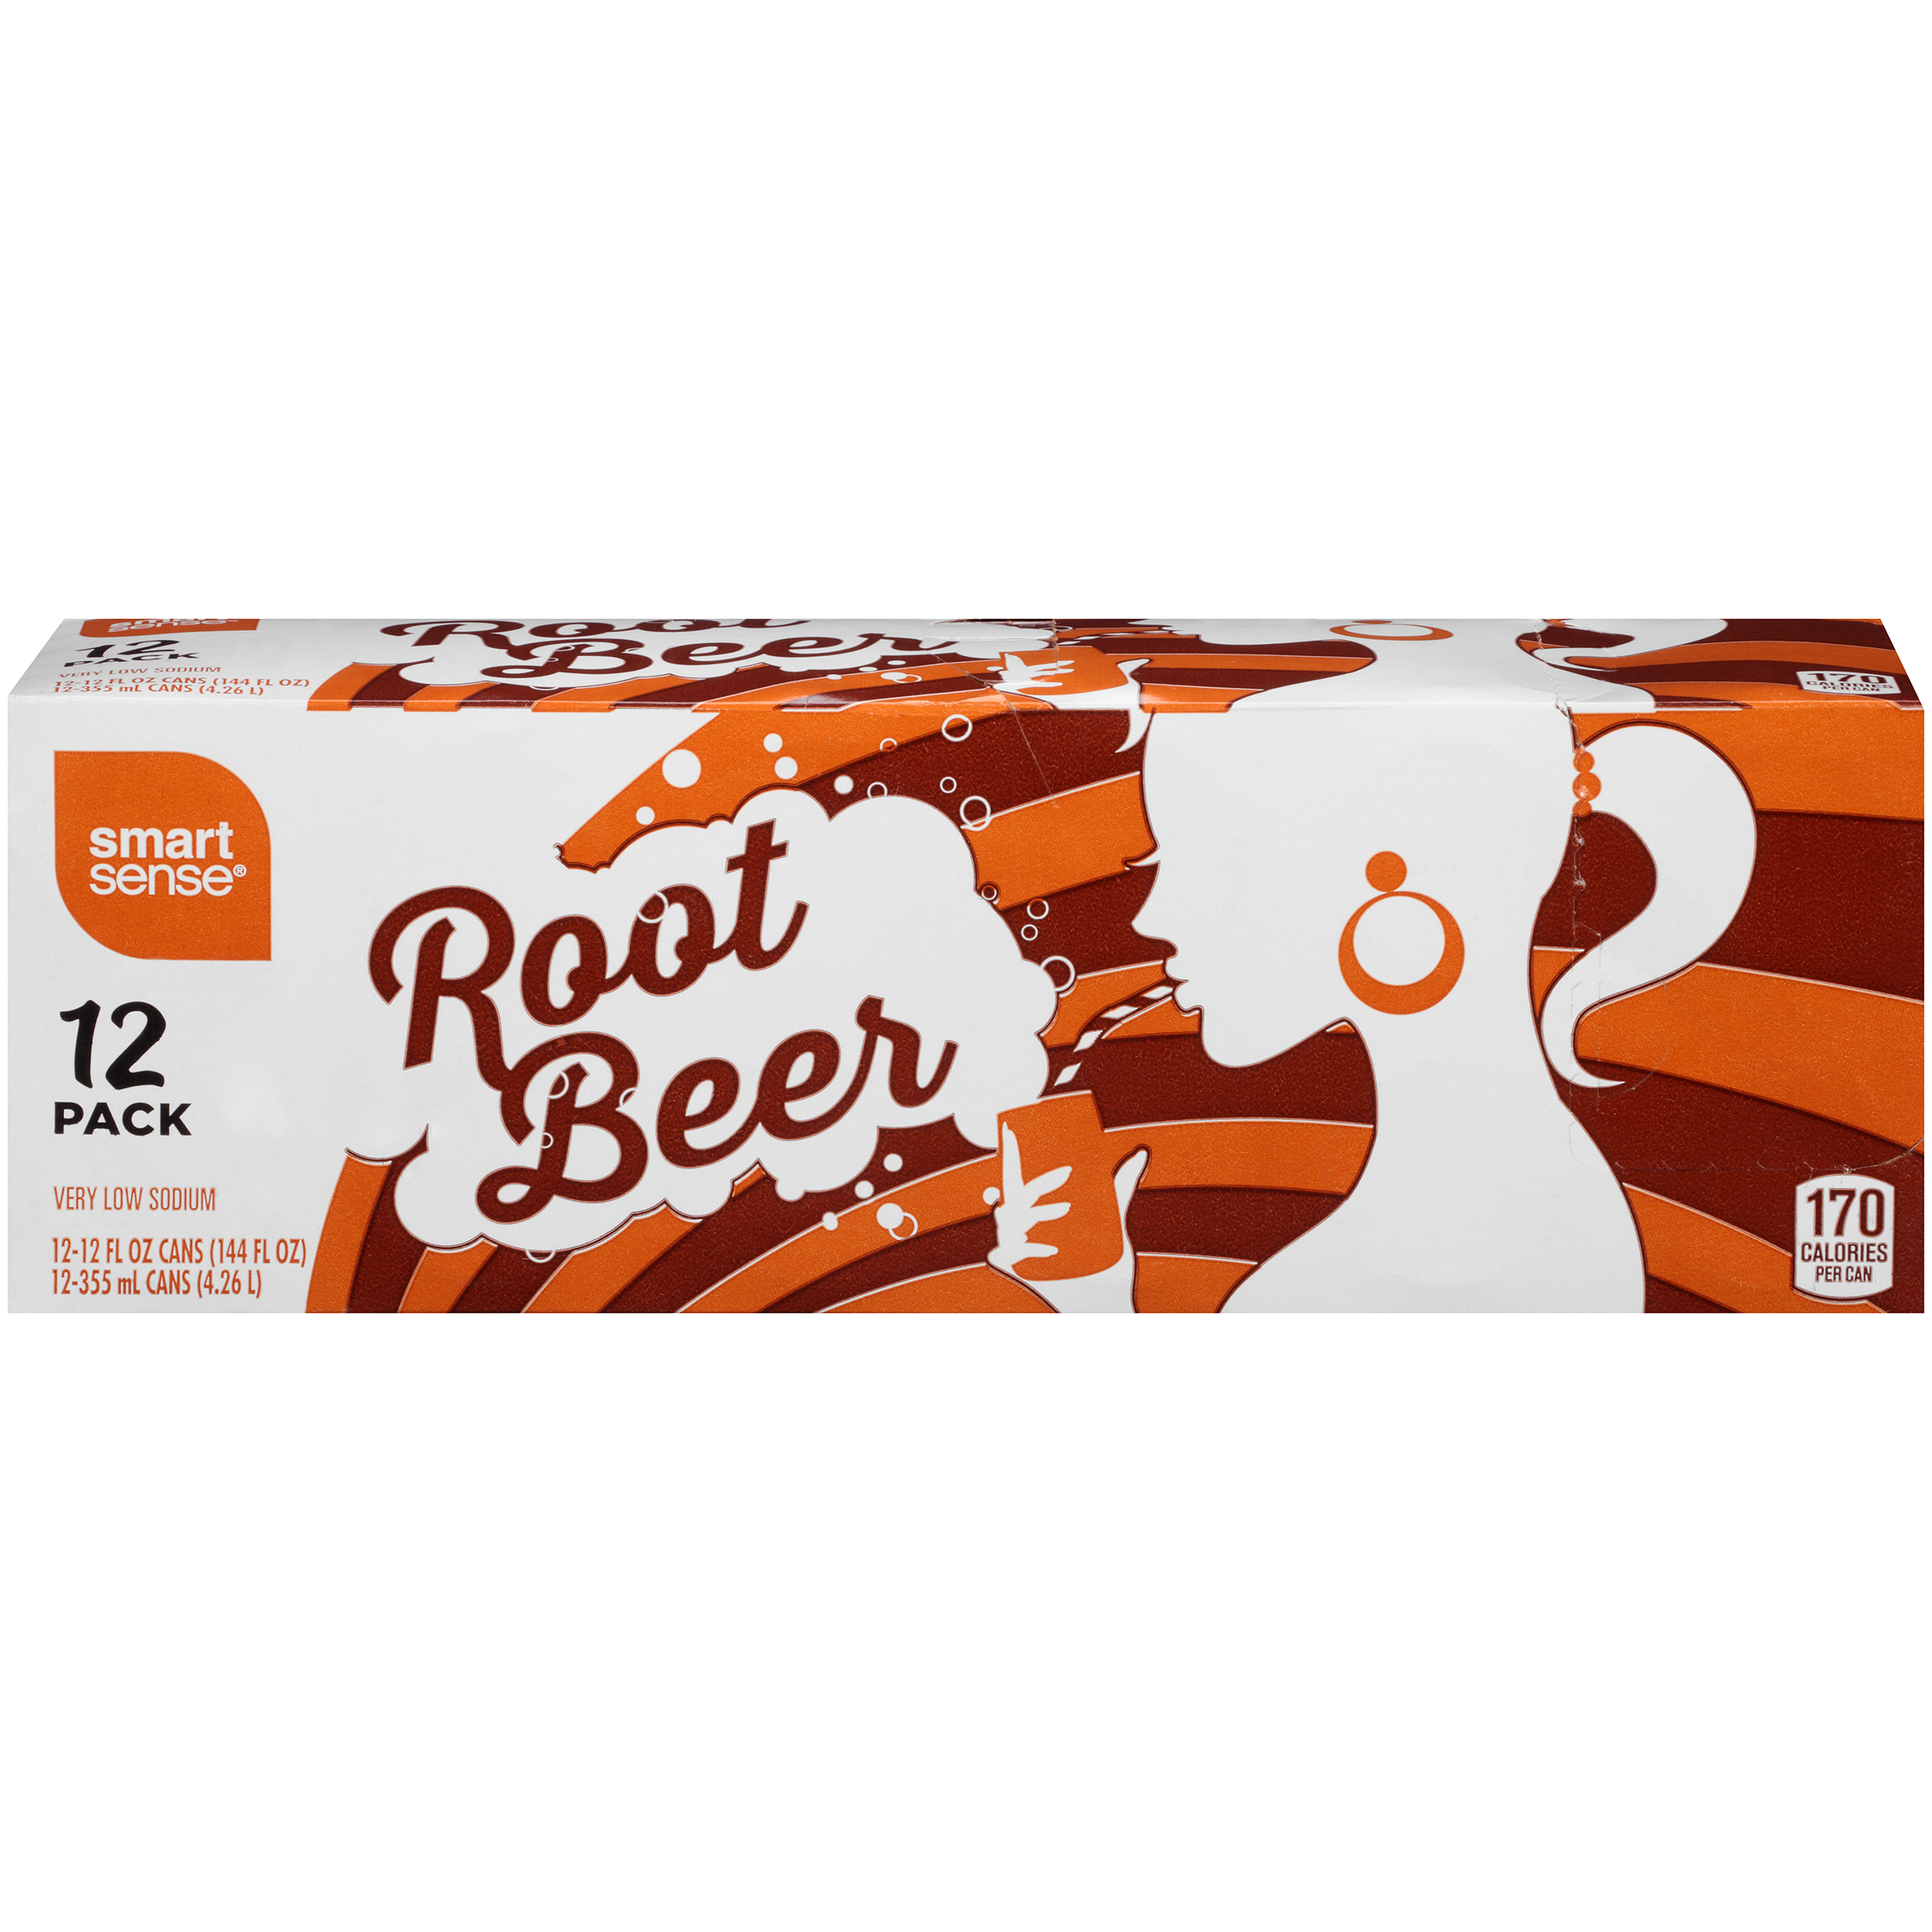 Smart Sense Root Beer Food Product Image